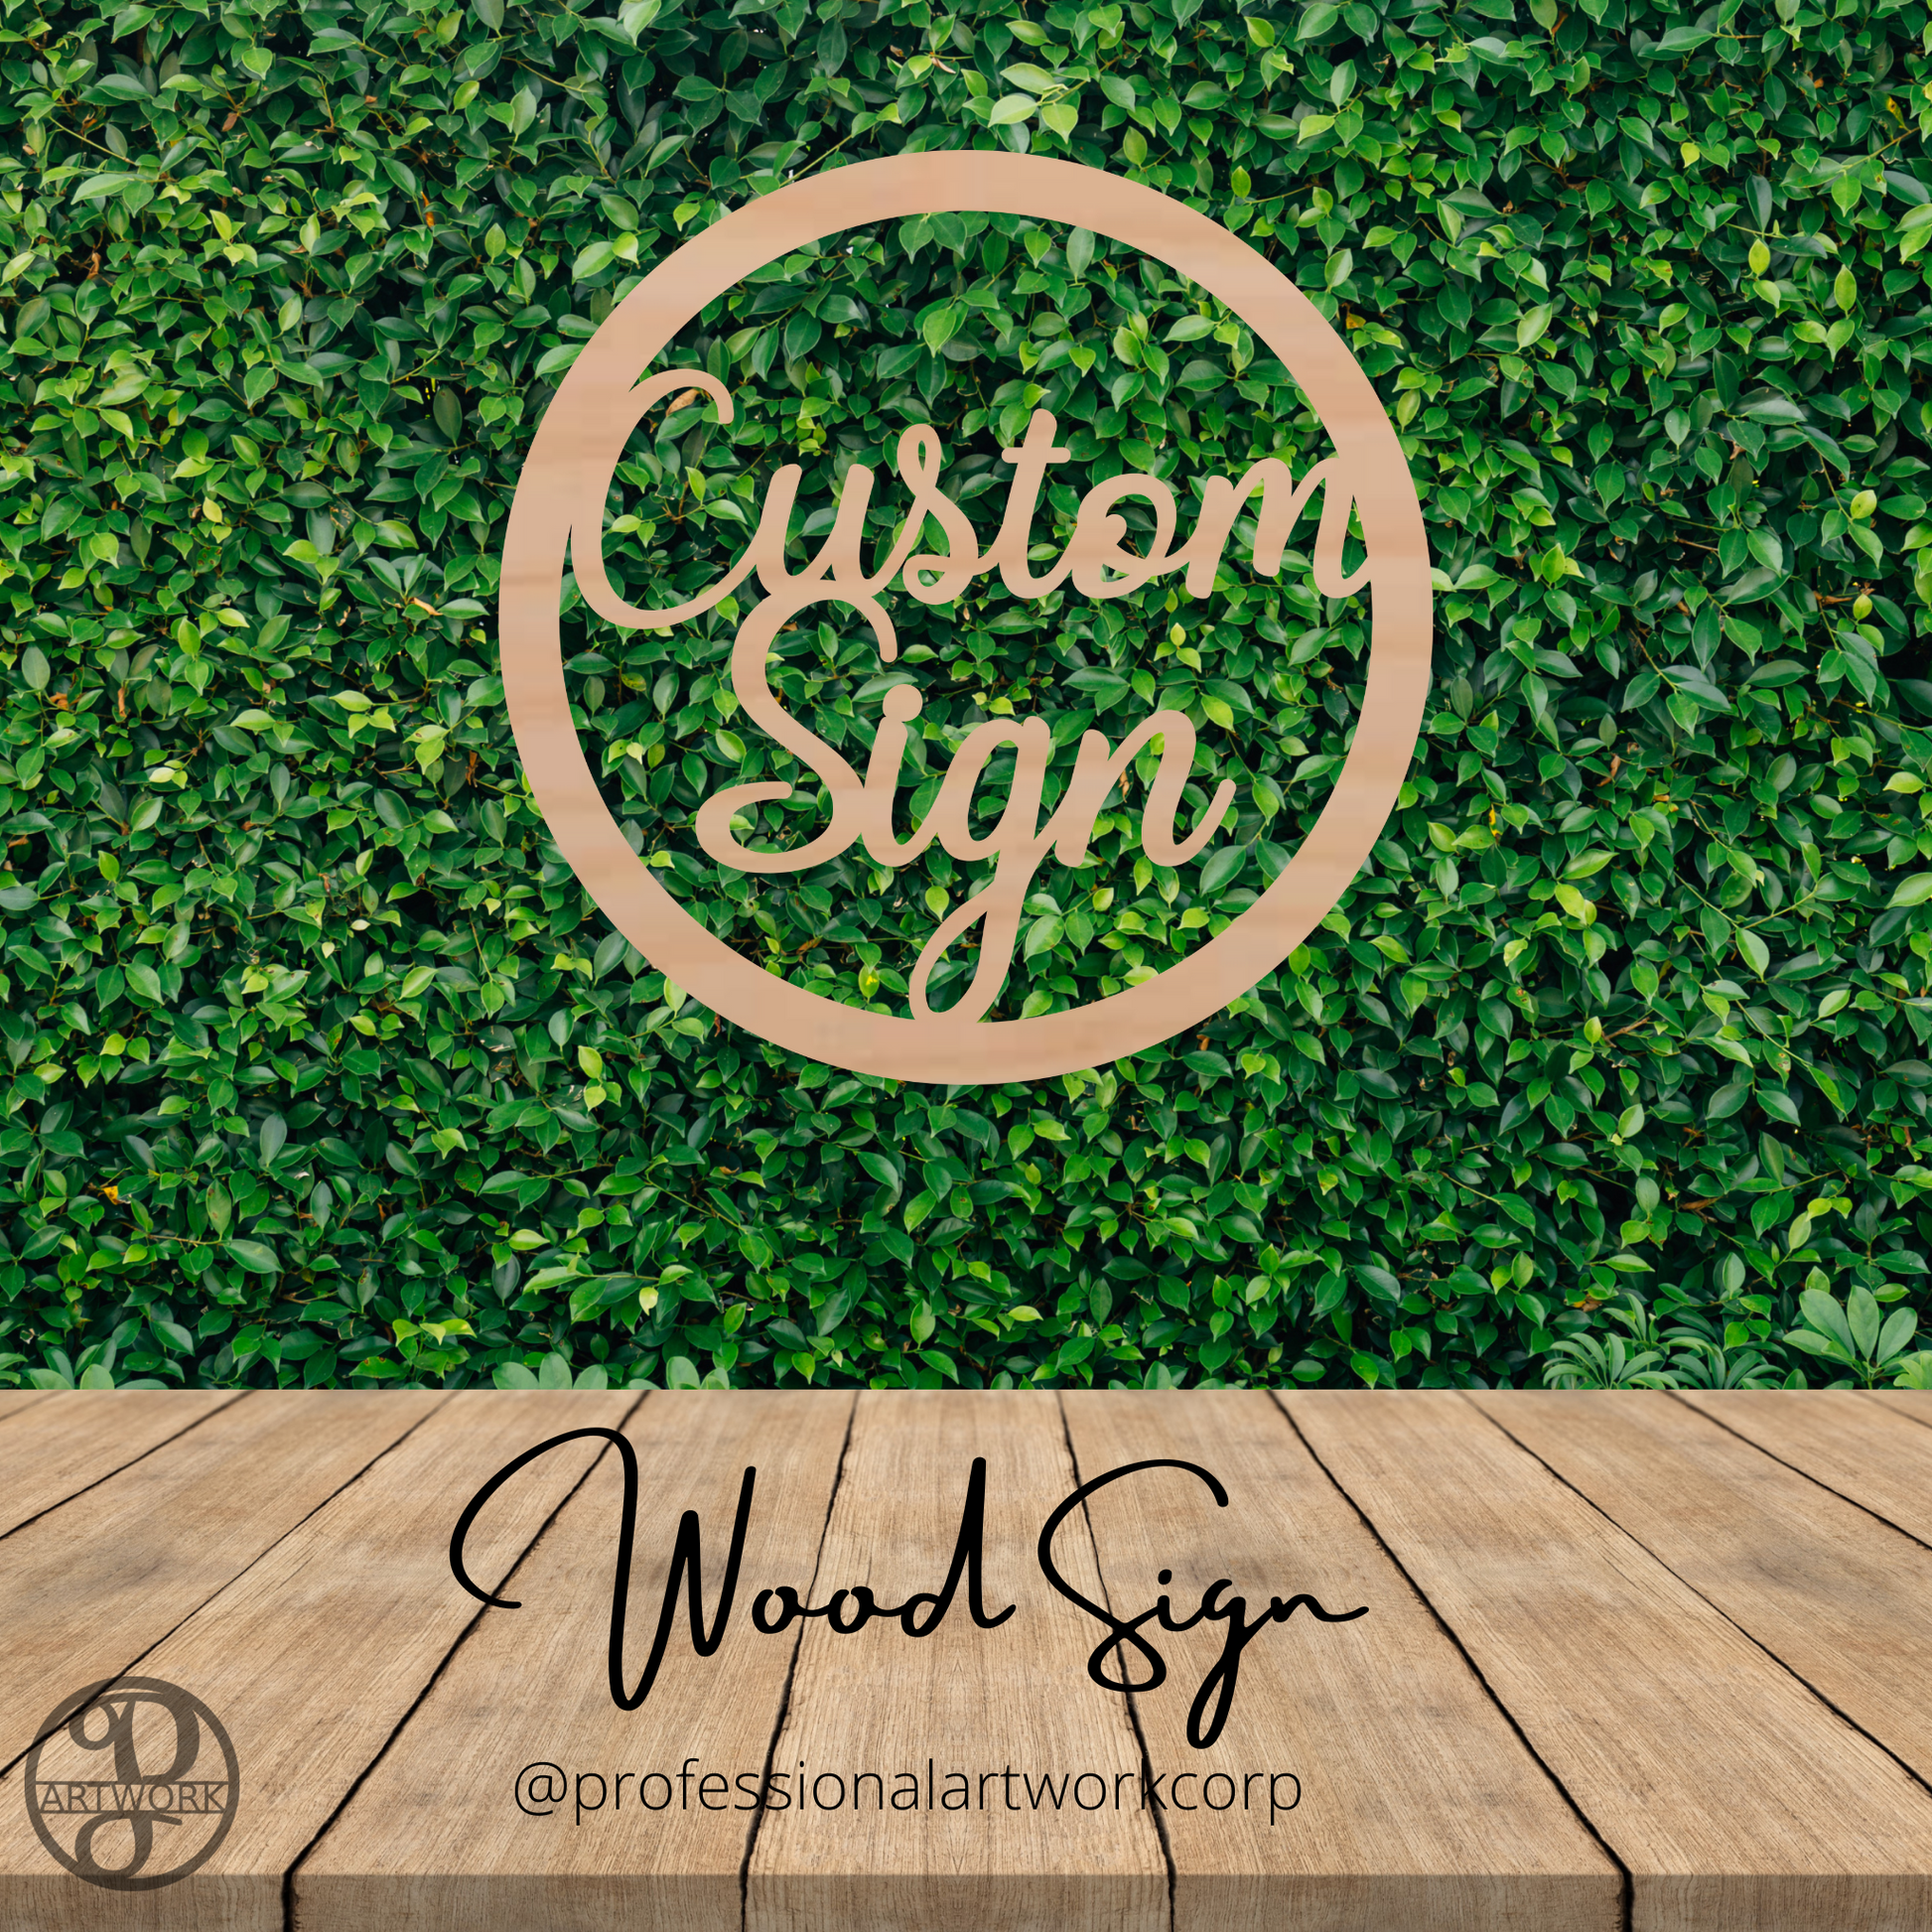 Custom Round Wood Sign - Professional Artwork